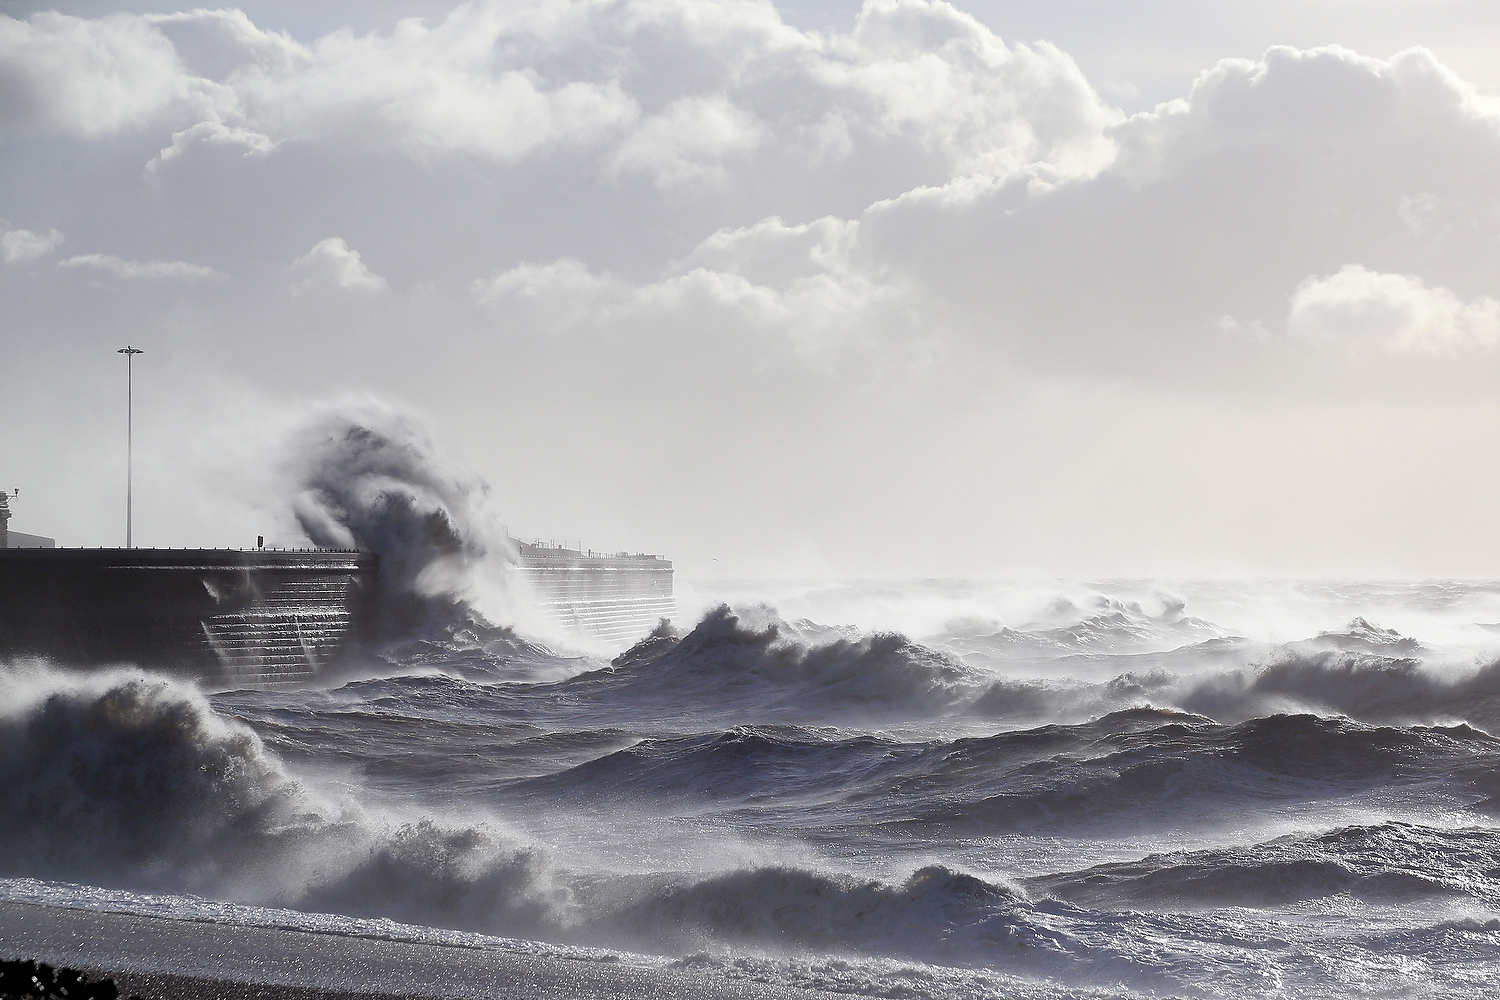 Hurricane Force Winds Batter England